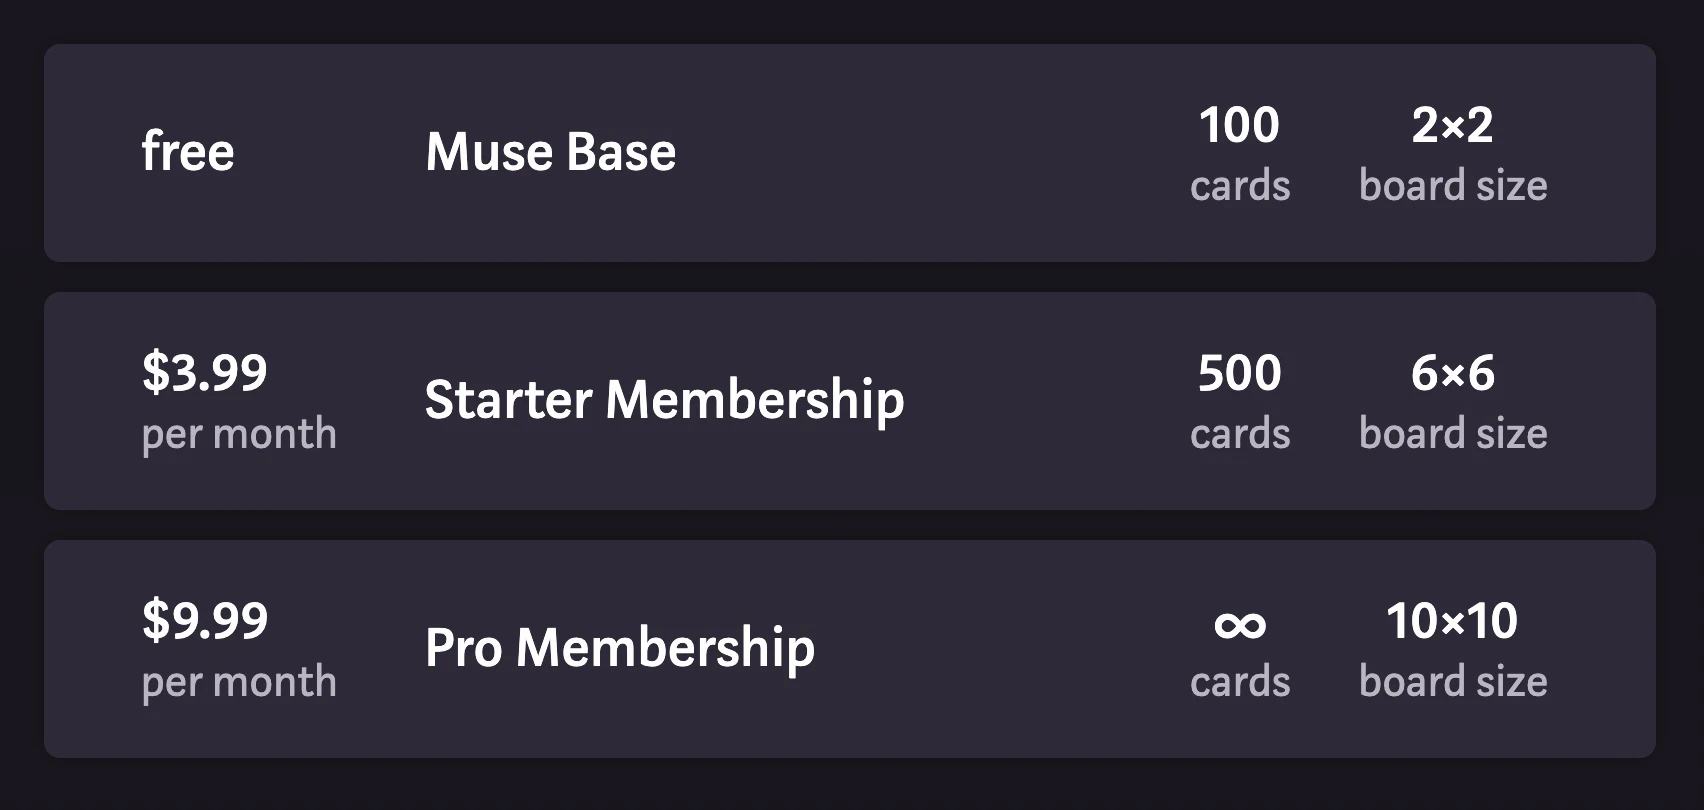 Muse Base, Starter membership, and Pro membership